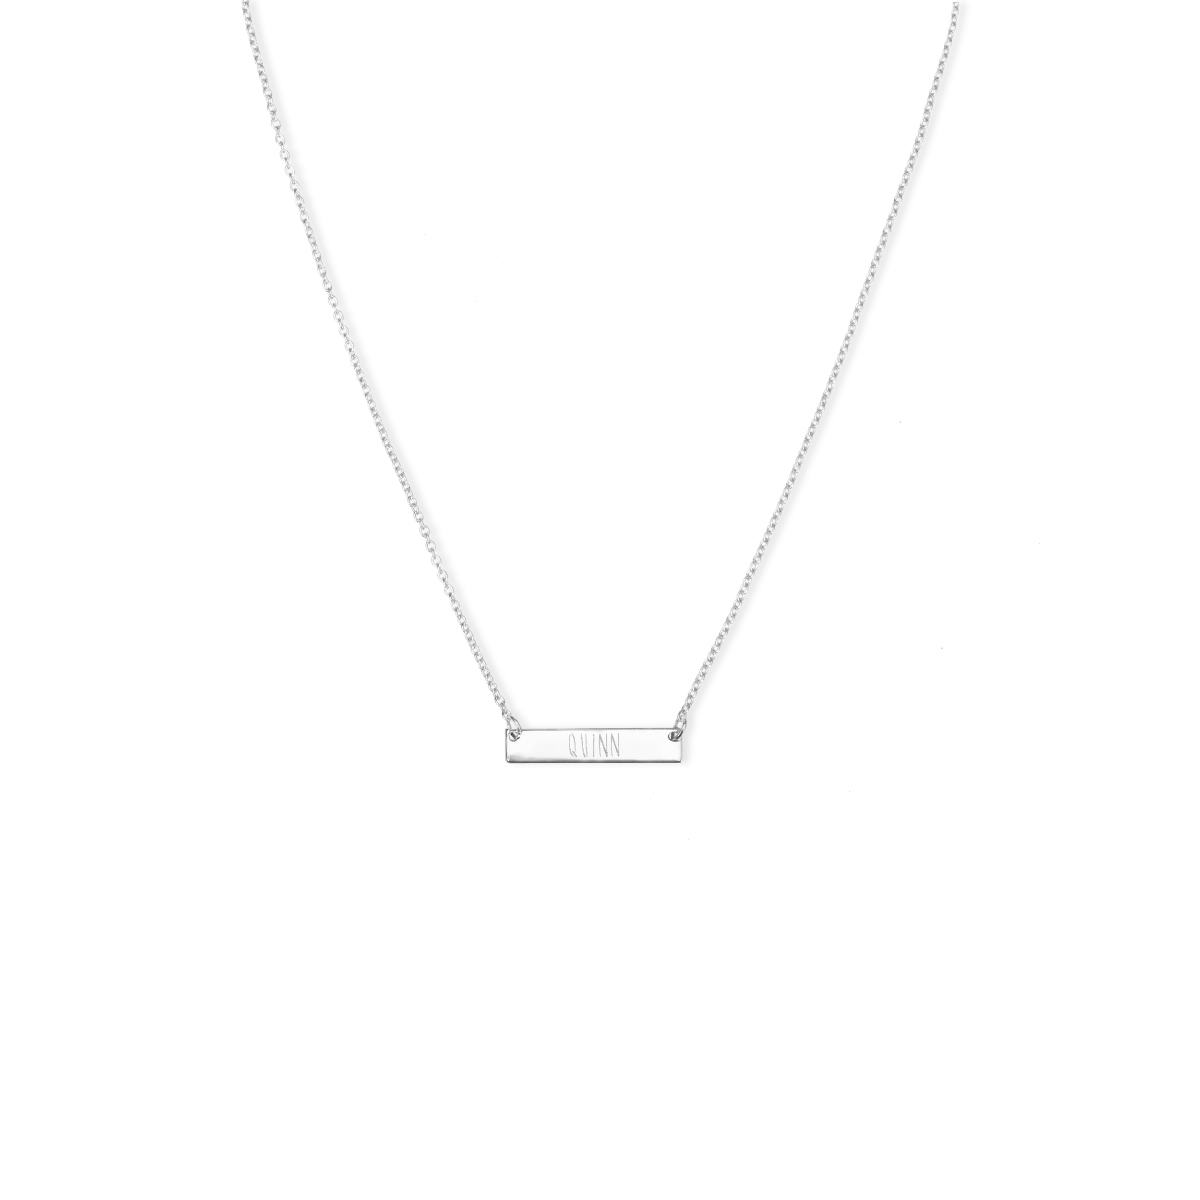 Mini Bar Necklace